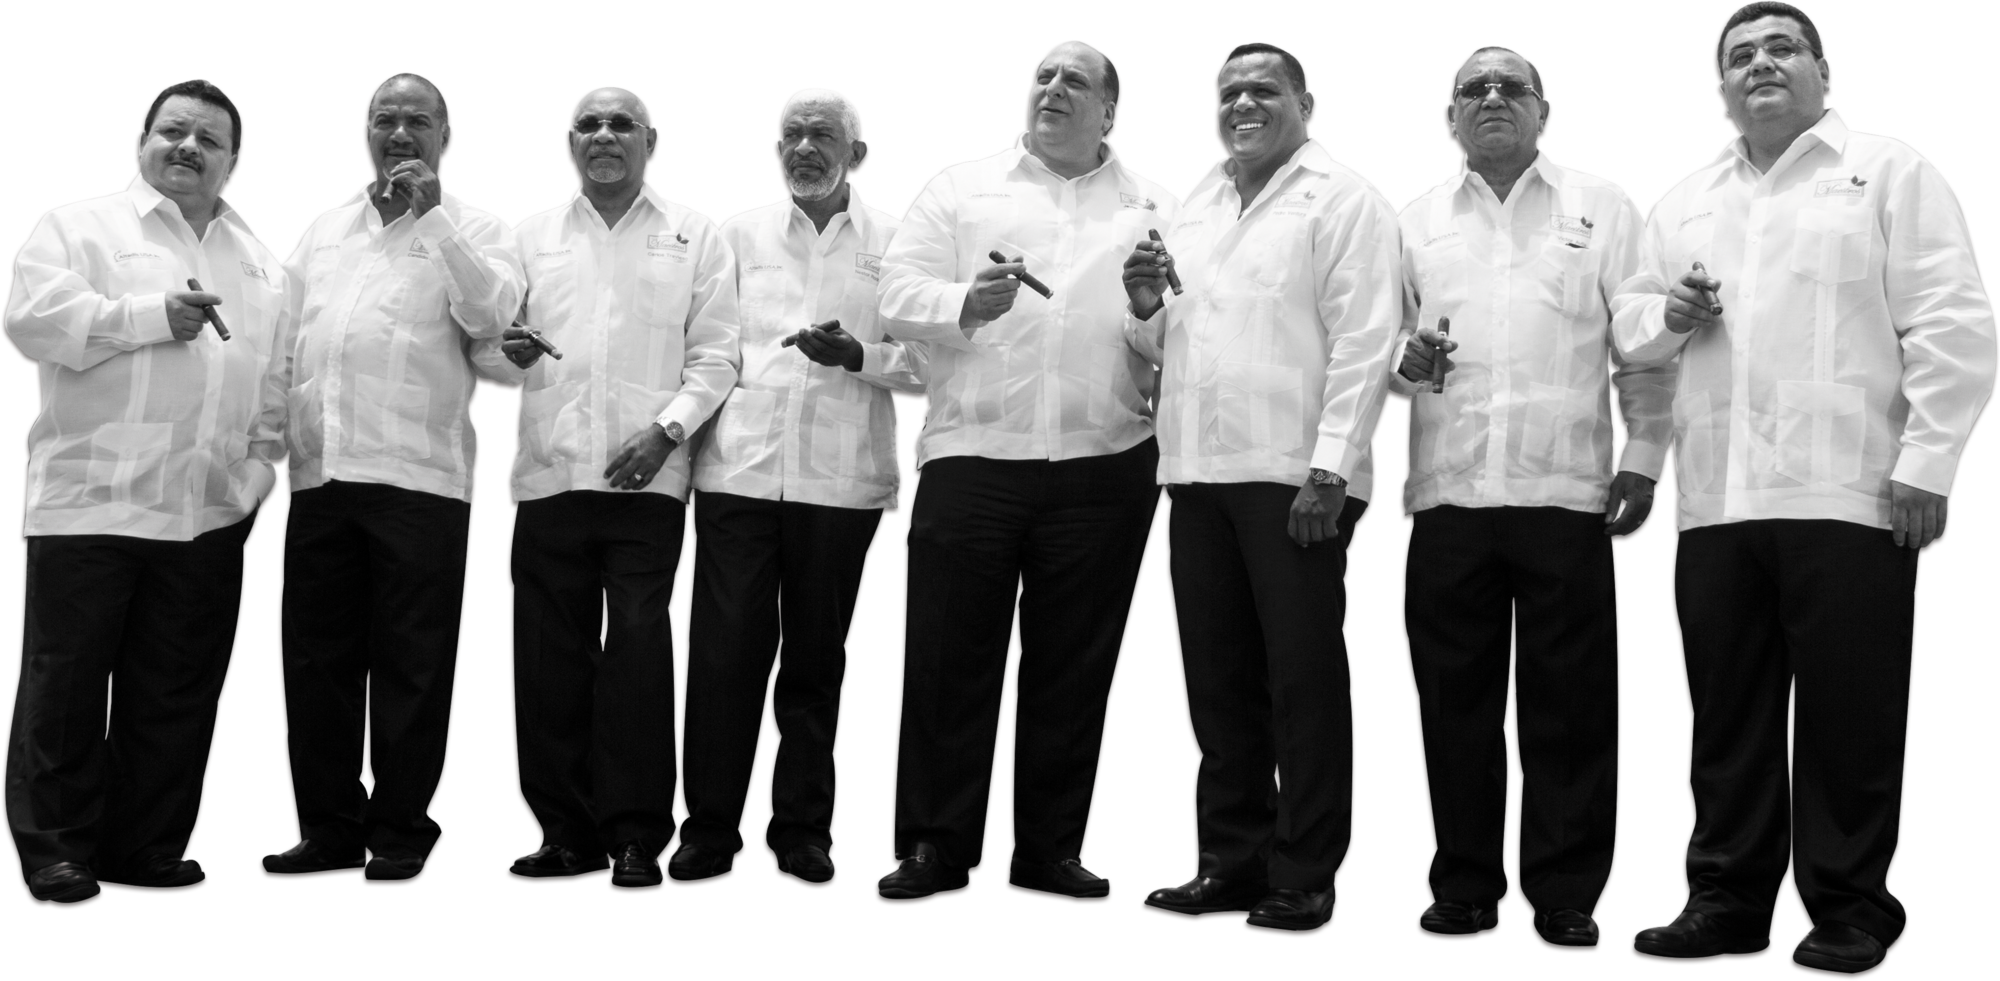 an image of the Grupo de Maestros holding cigars